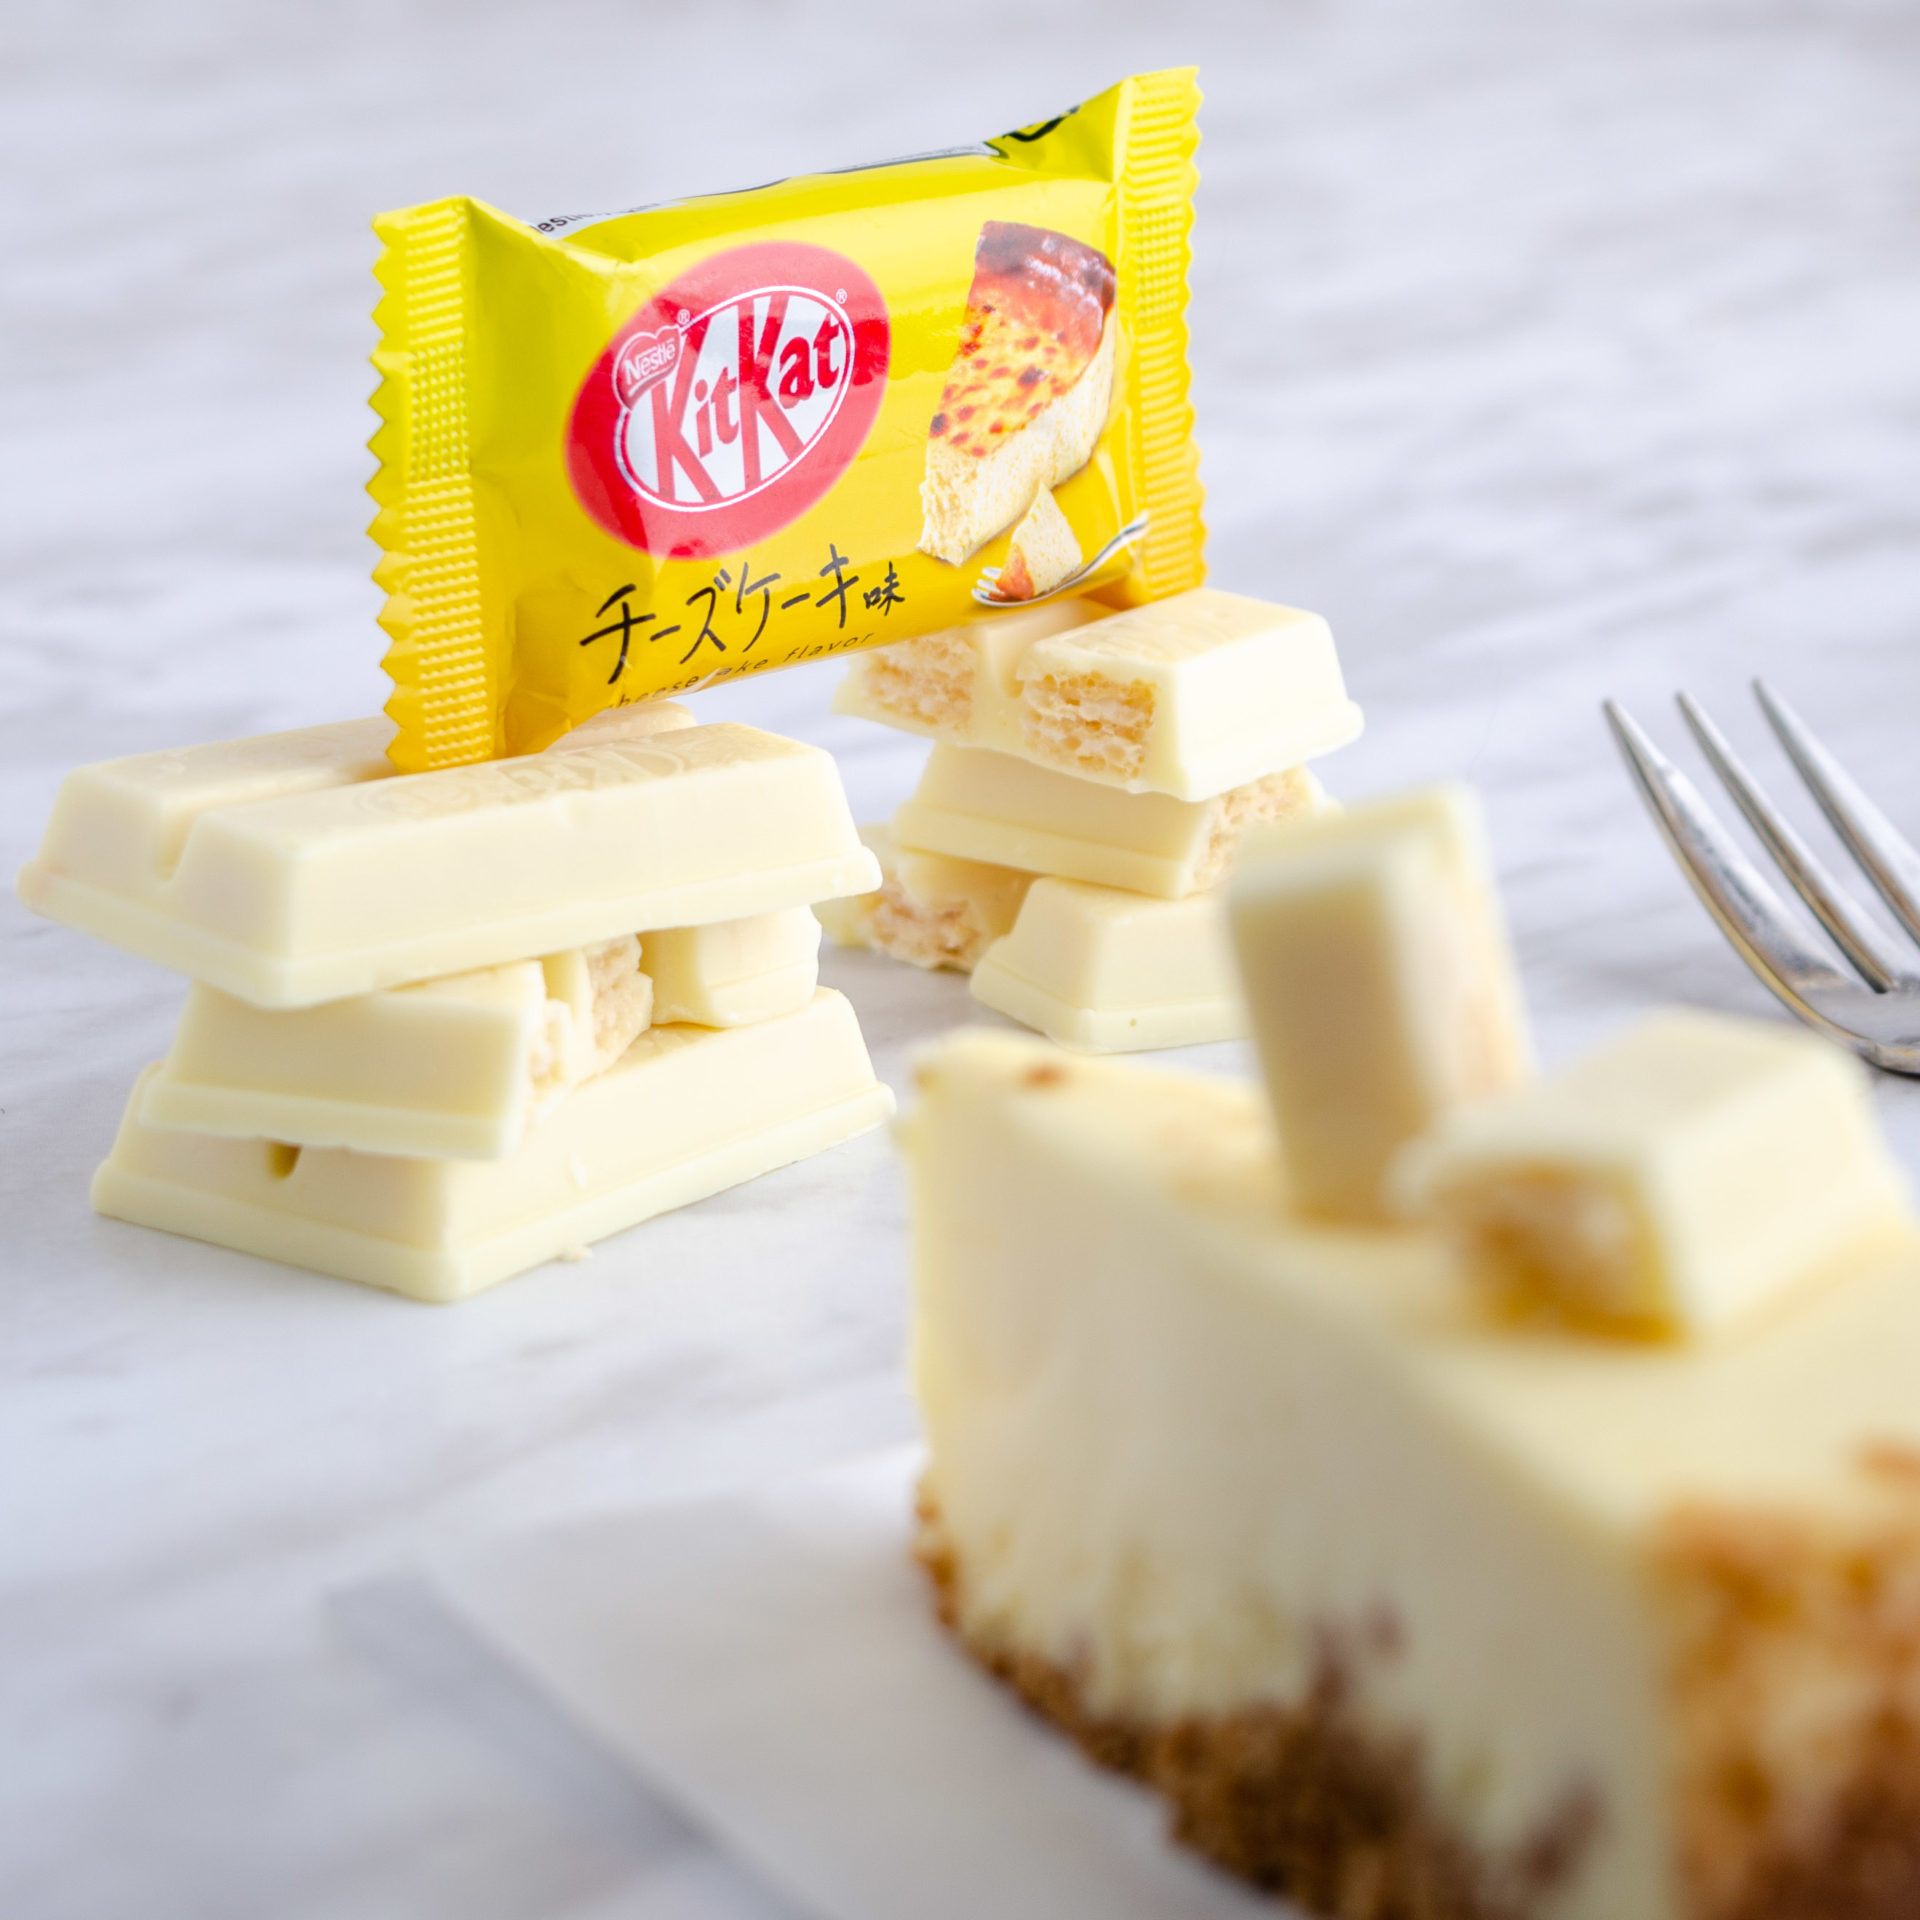 Creative kit-kat food photography with cheesecake